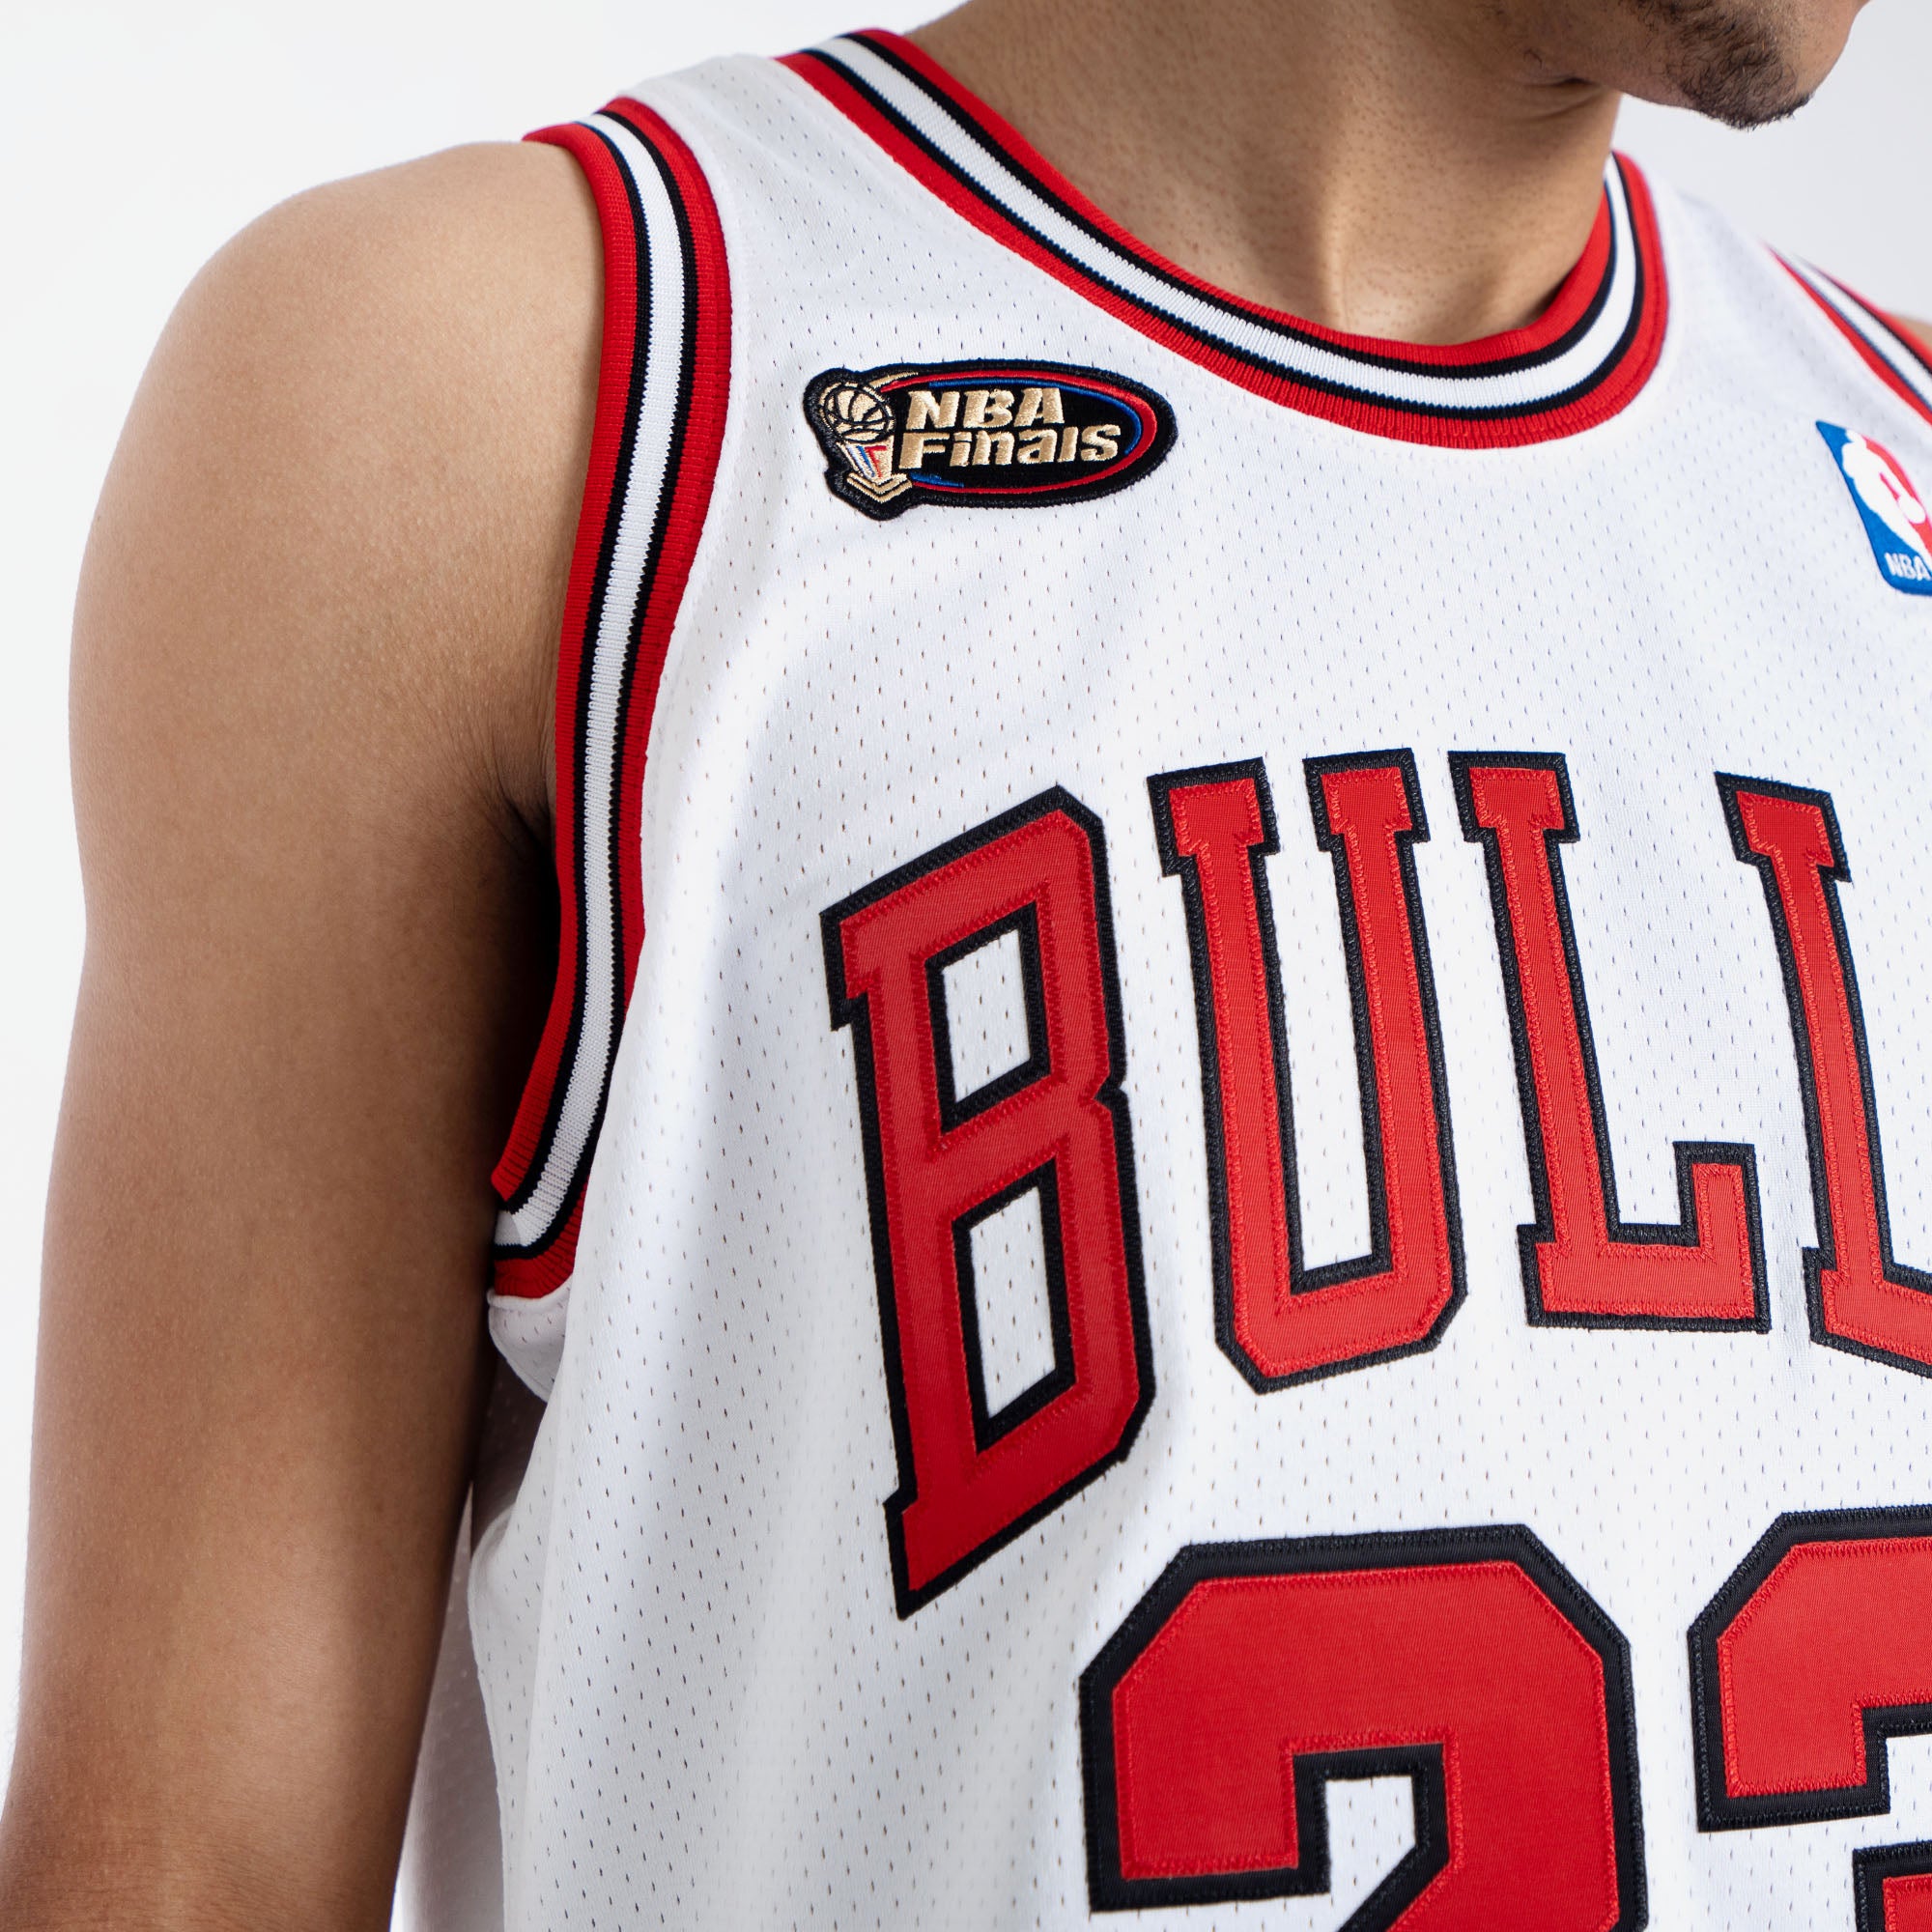 Michael Jordan 97/98 Auth Chicago Bulls Jersey